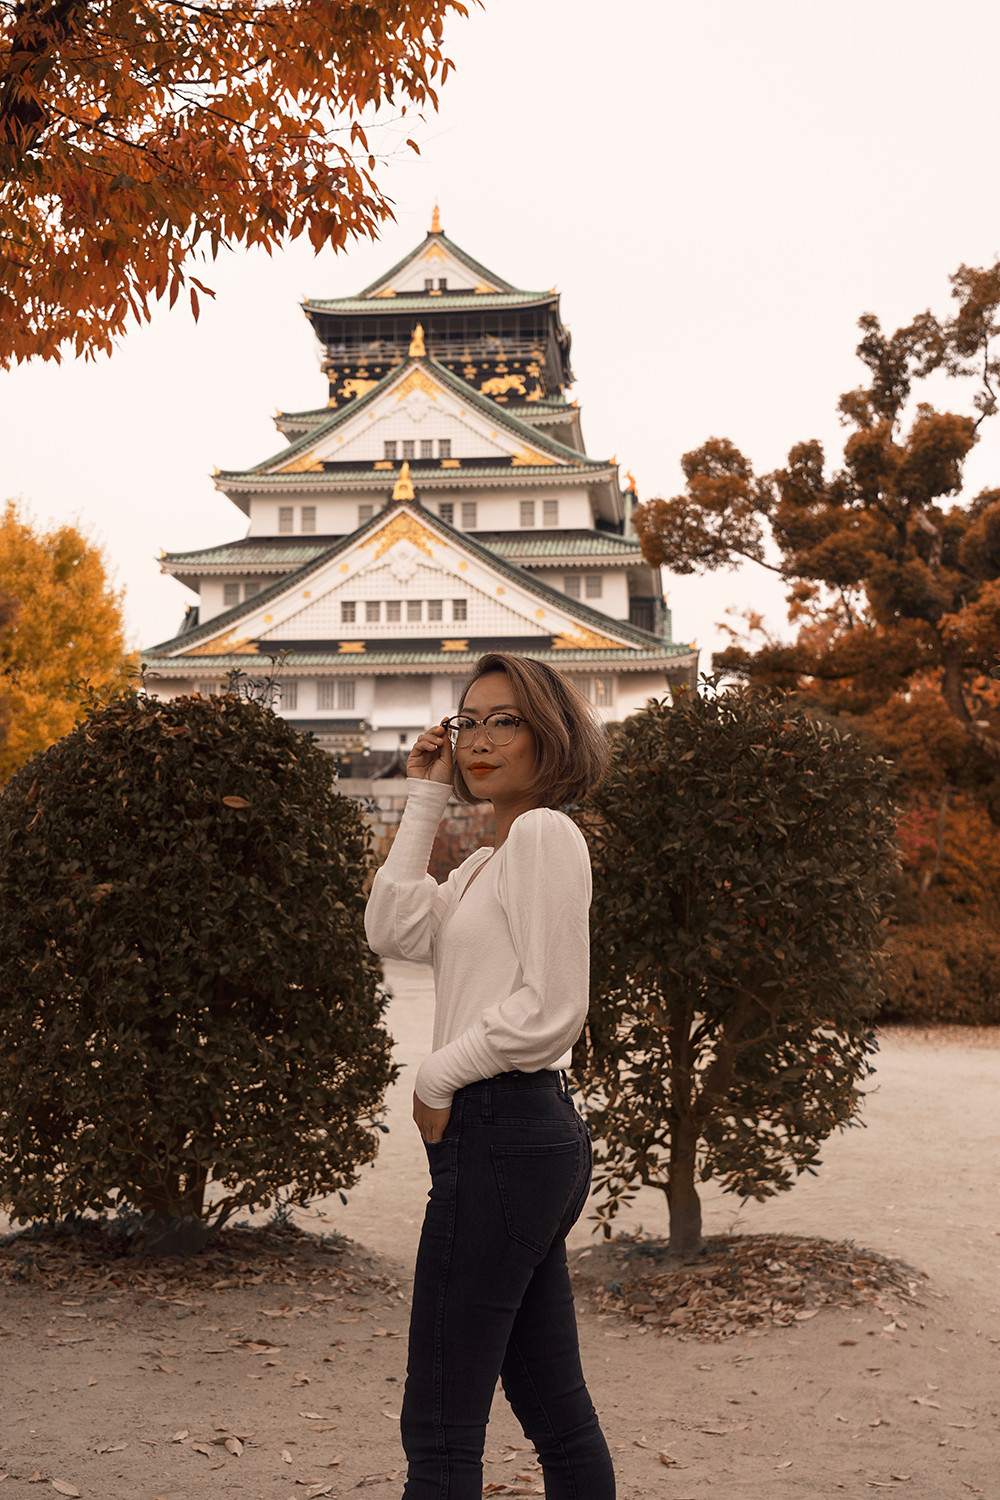 06osaka-castle-japan-fallfoliage-autumn-travel